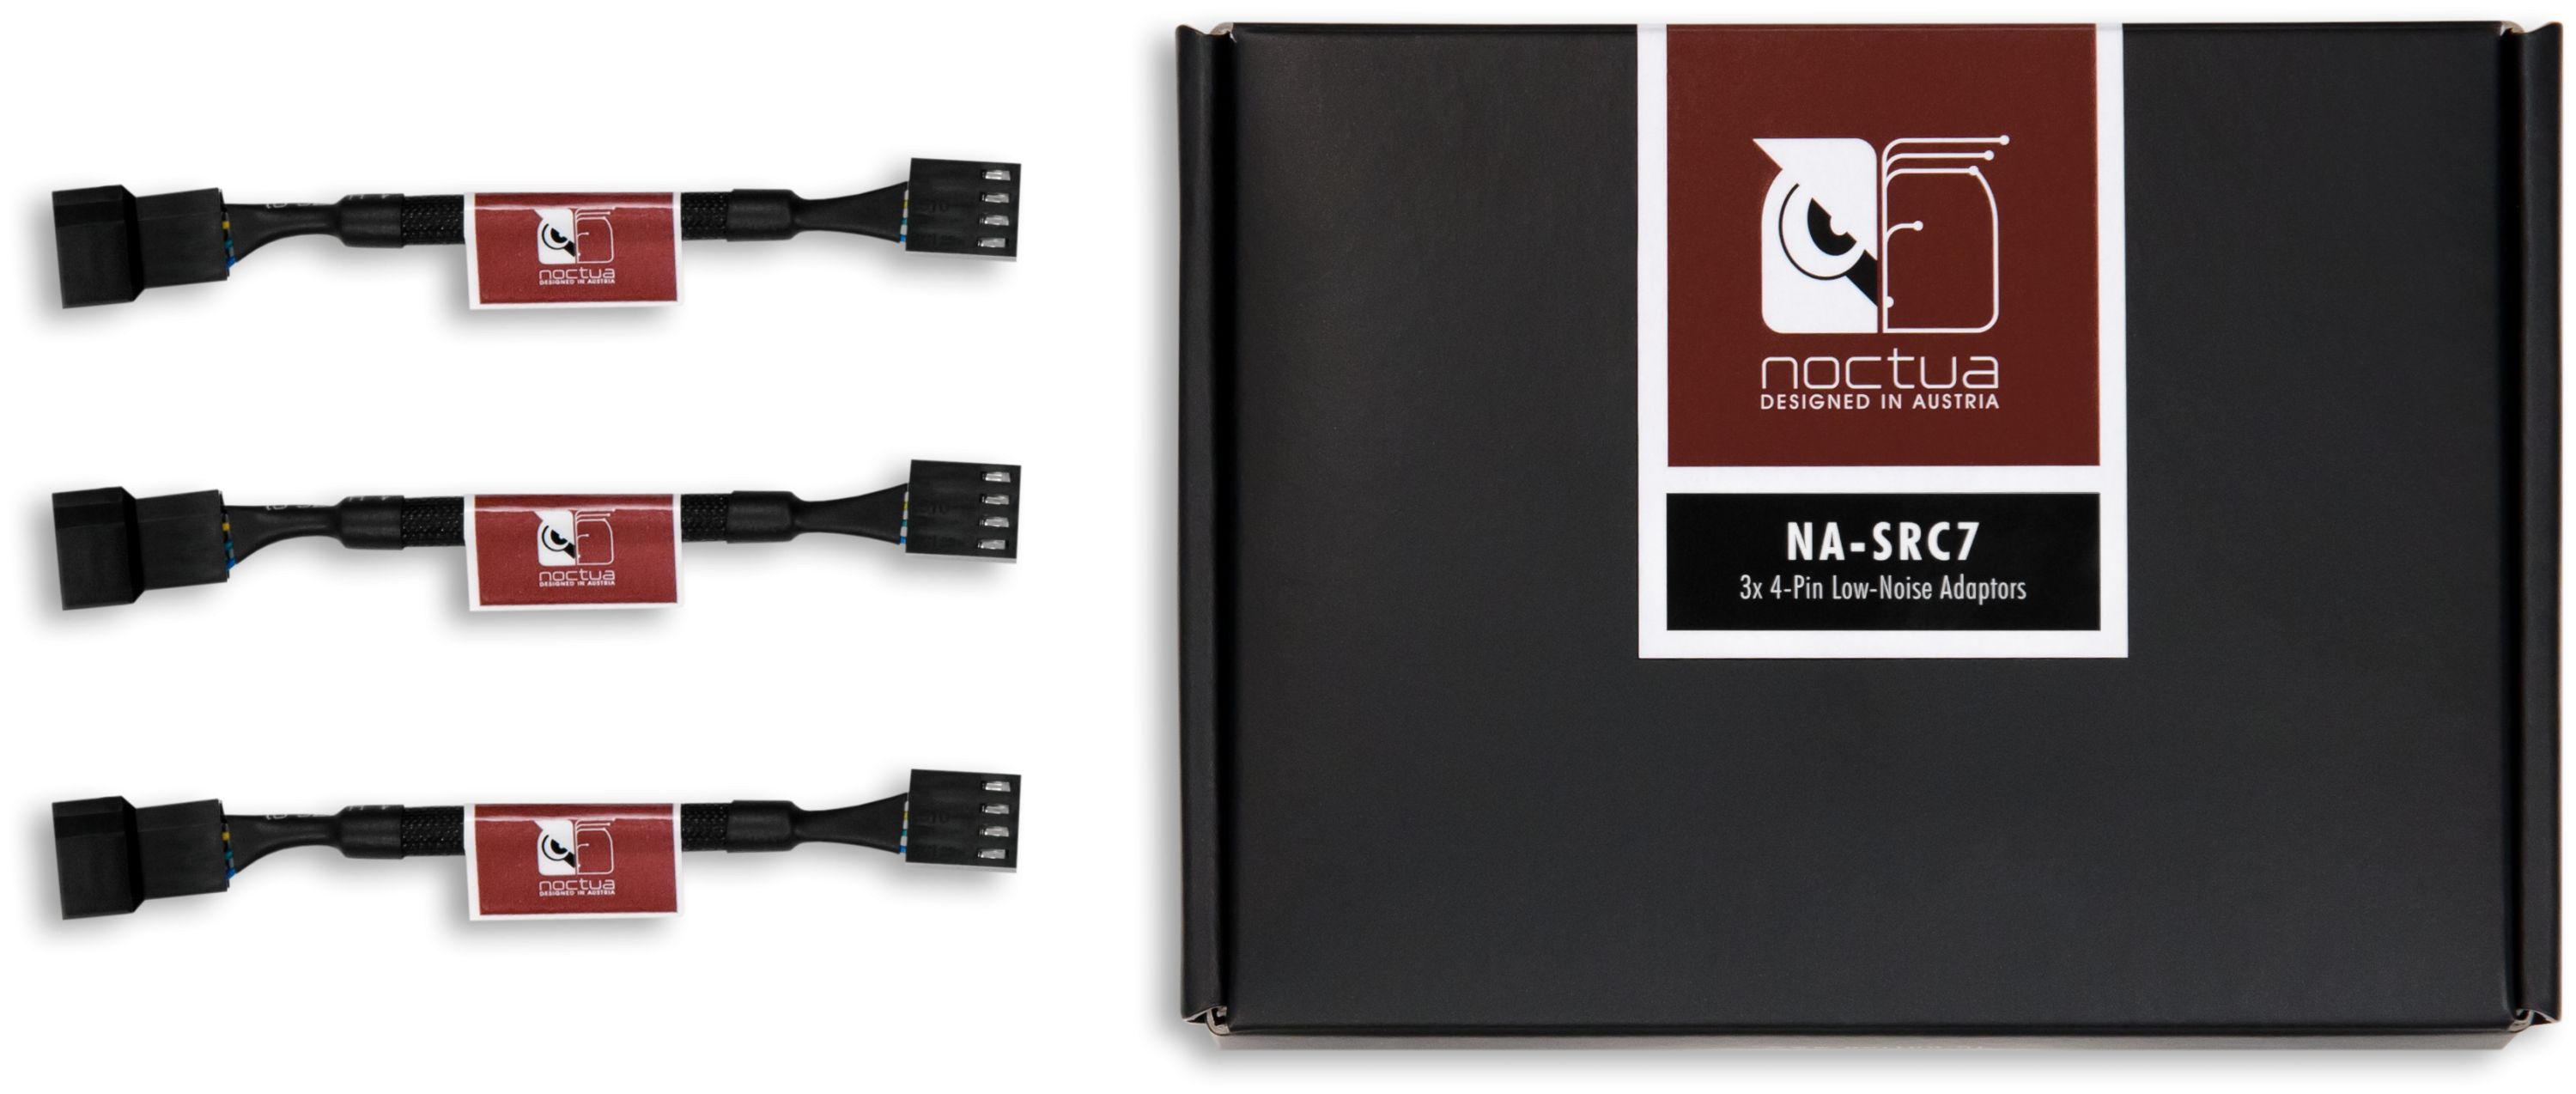 Noctua - Noctua NA-SRC7 4-Pin PWM Low-Noise Adaptors, 3 pack